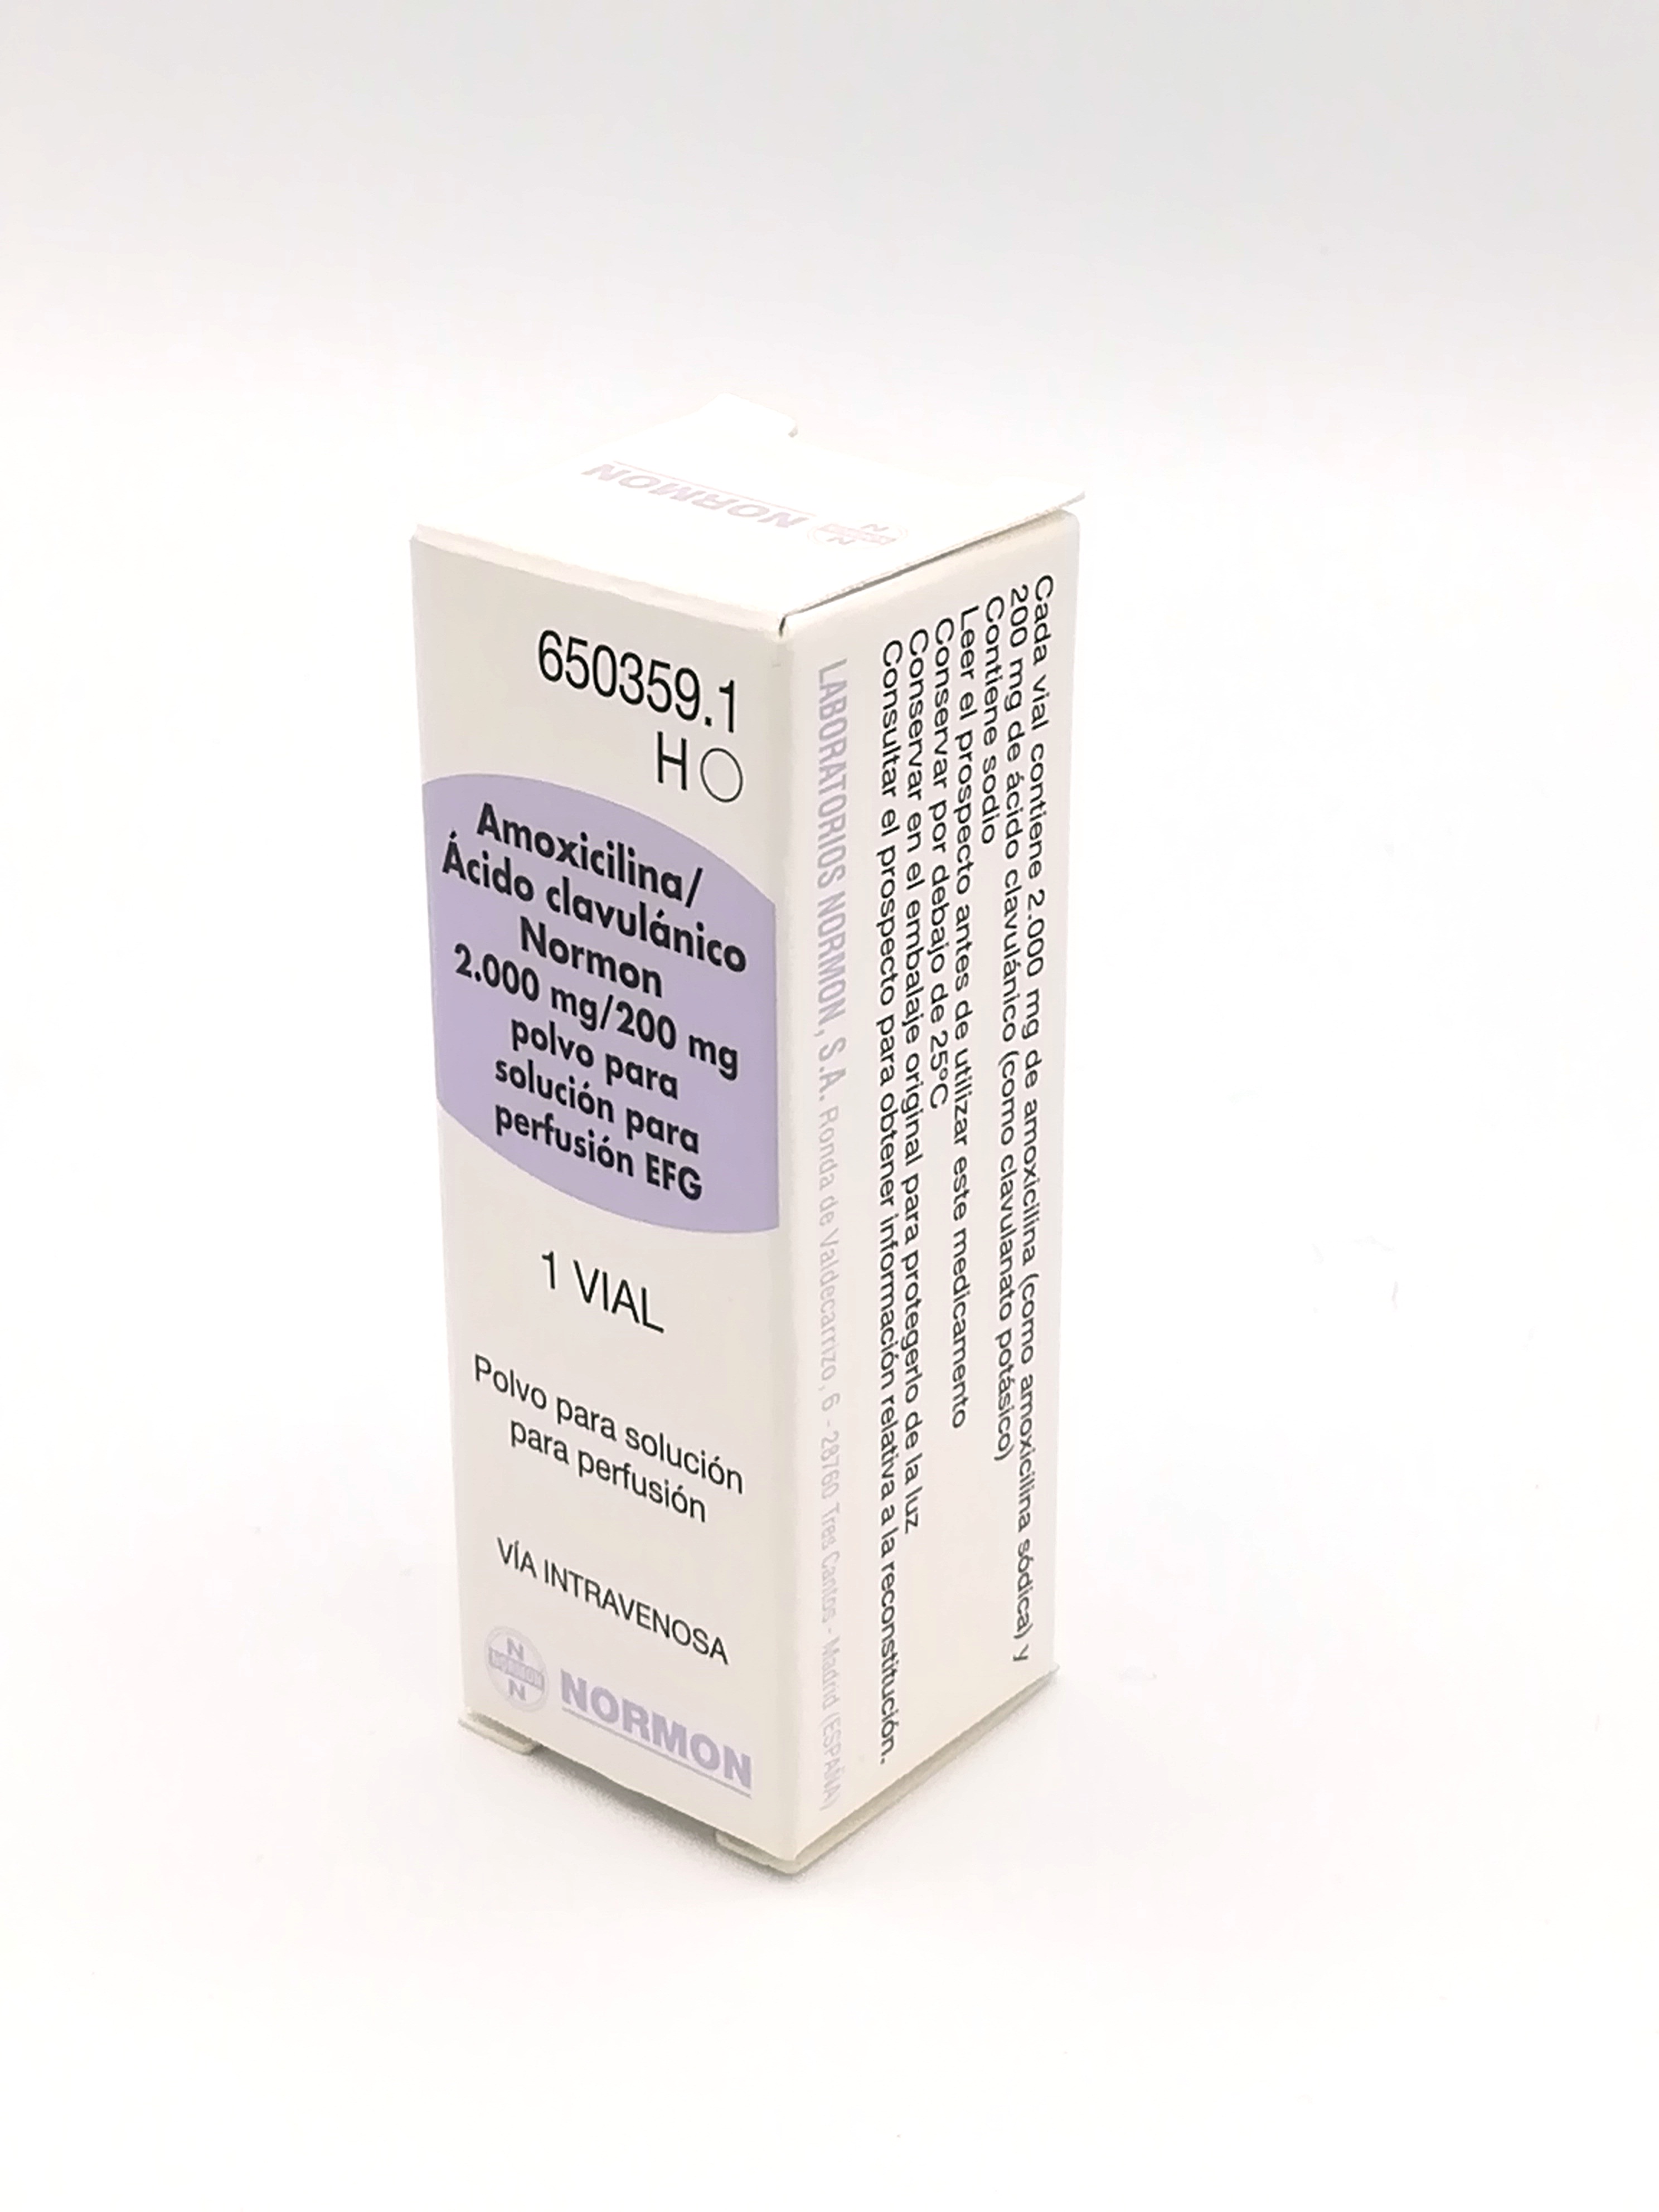 AMOXICILINA/ACIDO CLAVULANICO NORMON EFG 2000 mg/200 mg 100 VIALES POLVO  PARA SOLUCION PARA PERFUSION - Farmacéuticos